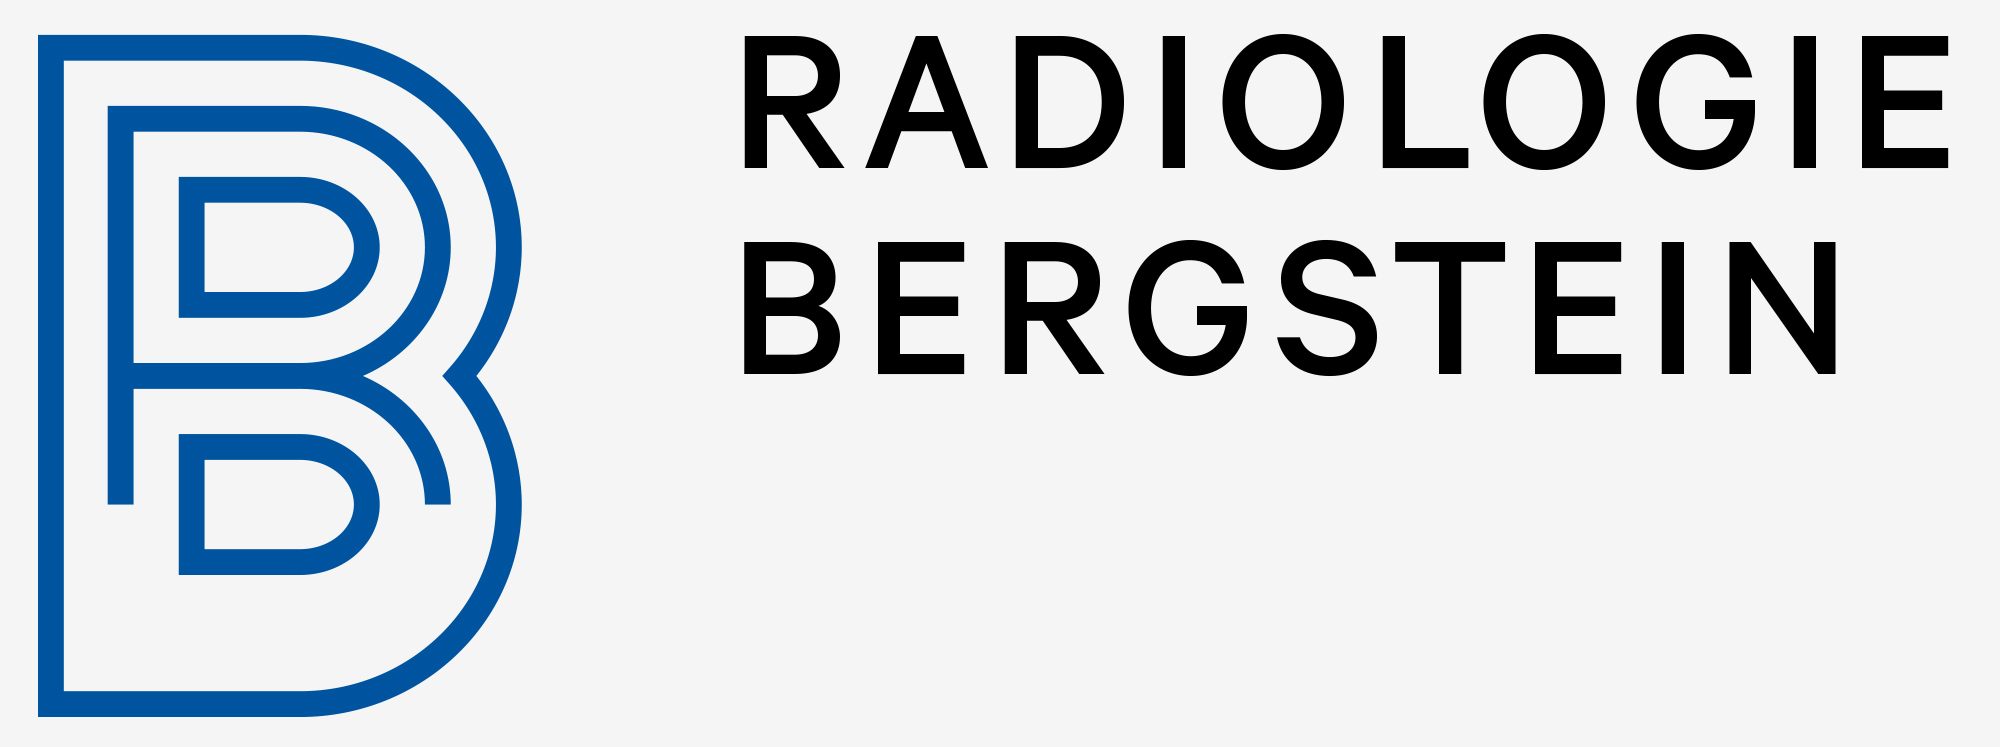 Radiologie Bergstein